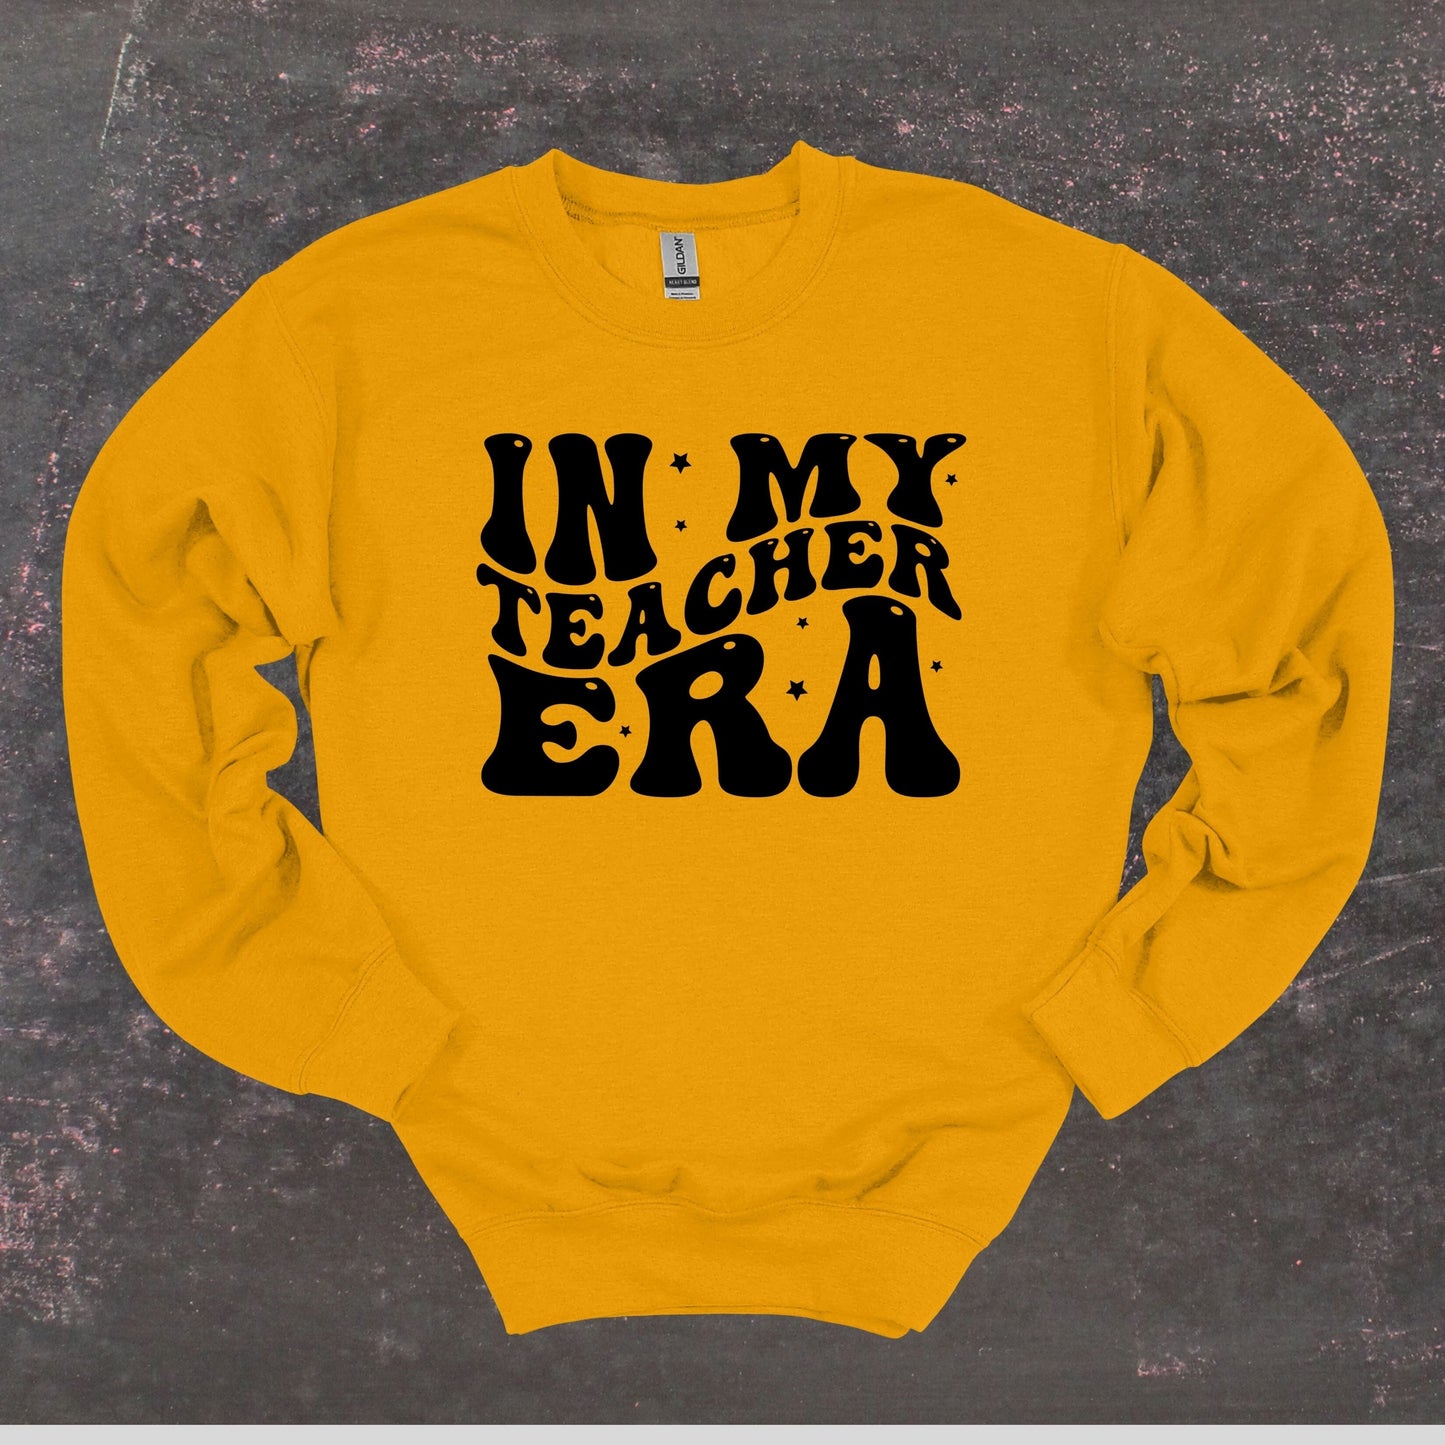 In My Teacher Era - Teacher Crewneck Sweatshirt - Adult Sweatshirts Crewneck Sweatshirt Graphic Avenue Gold Adult Small 